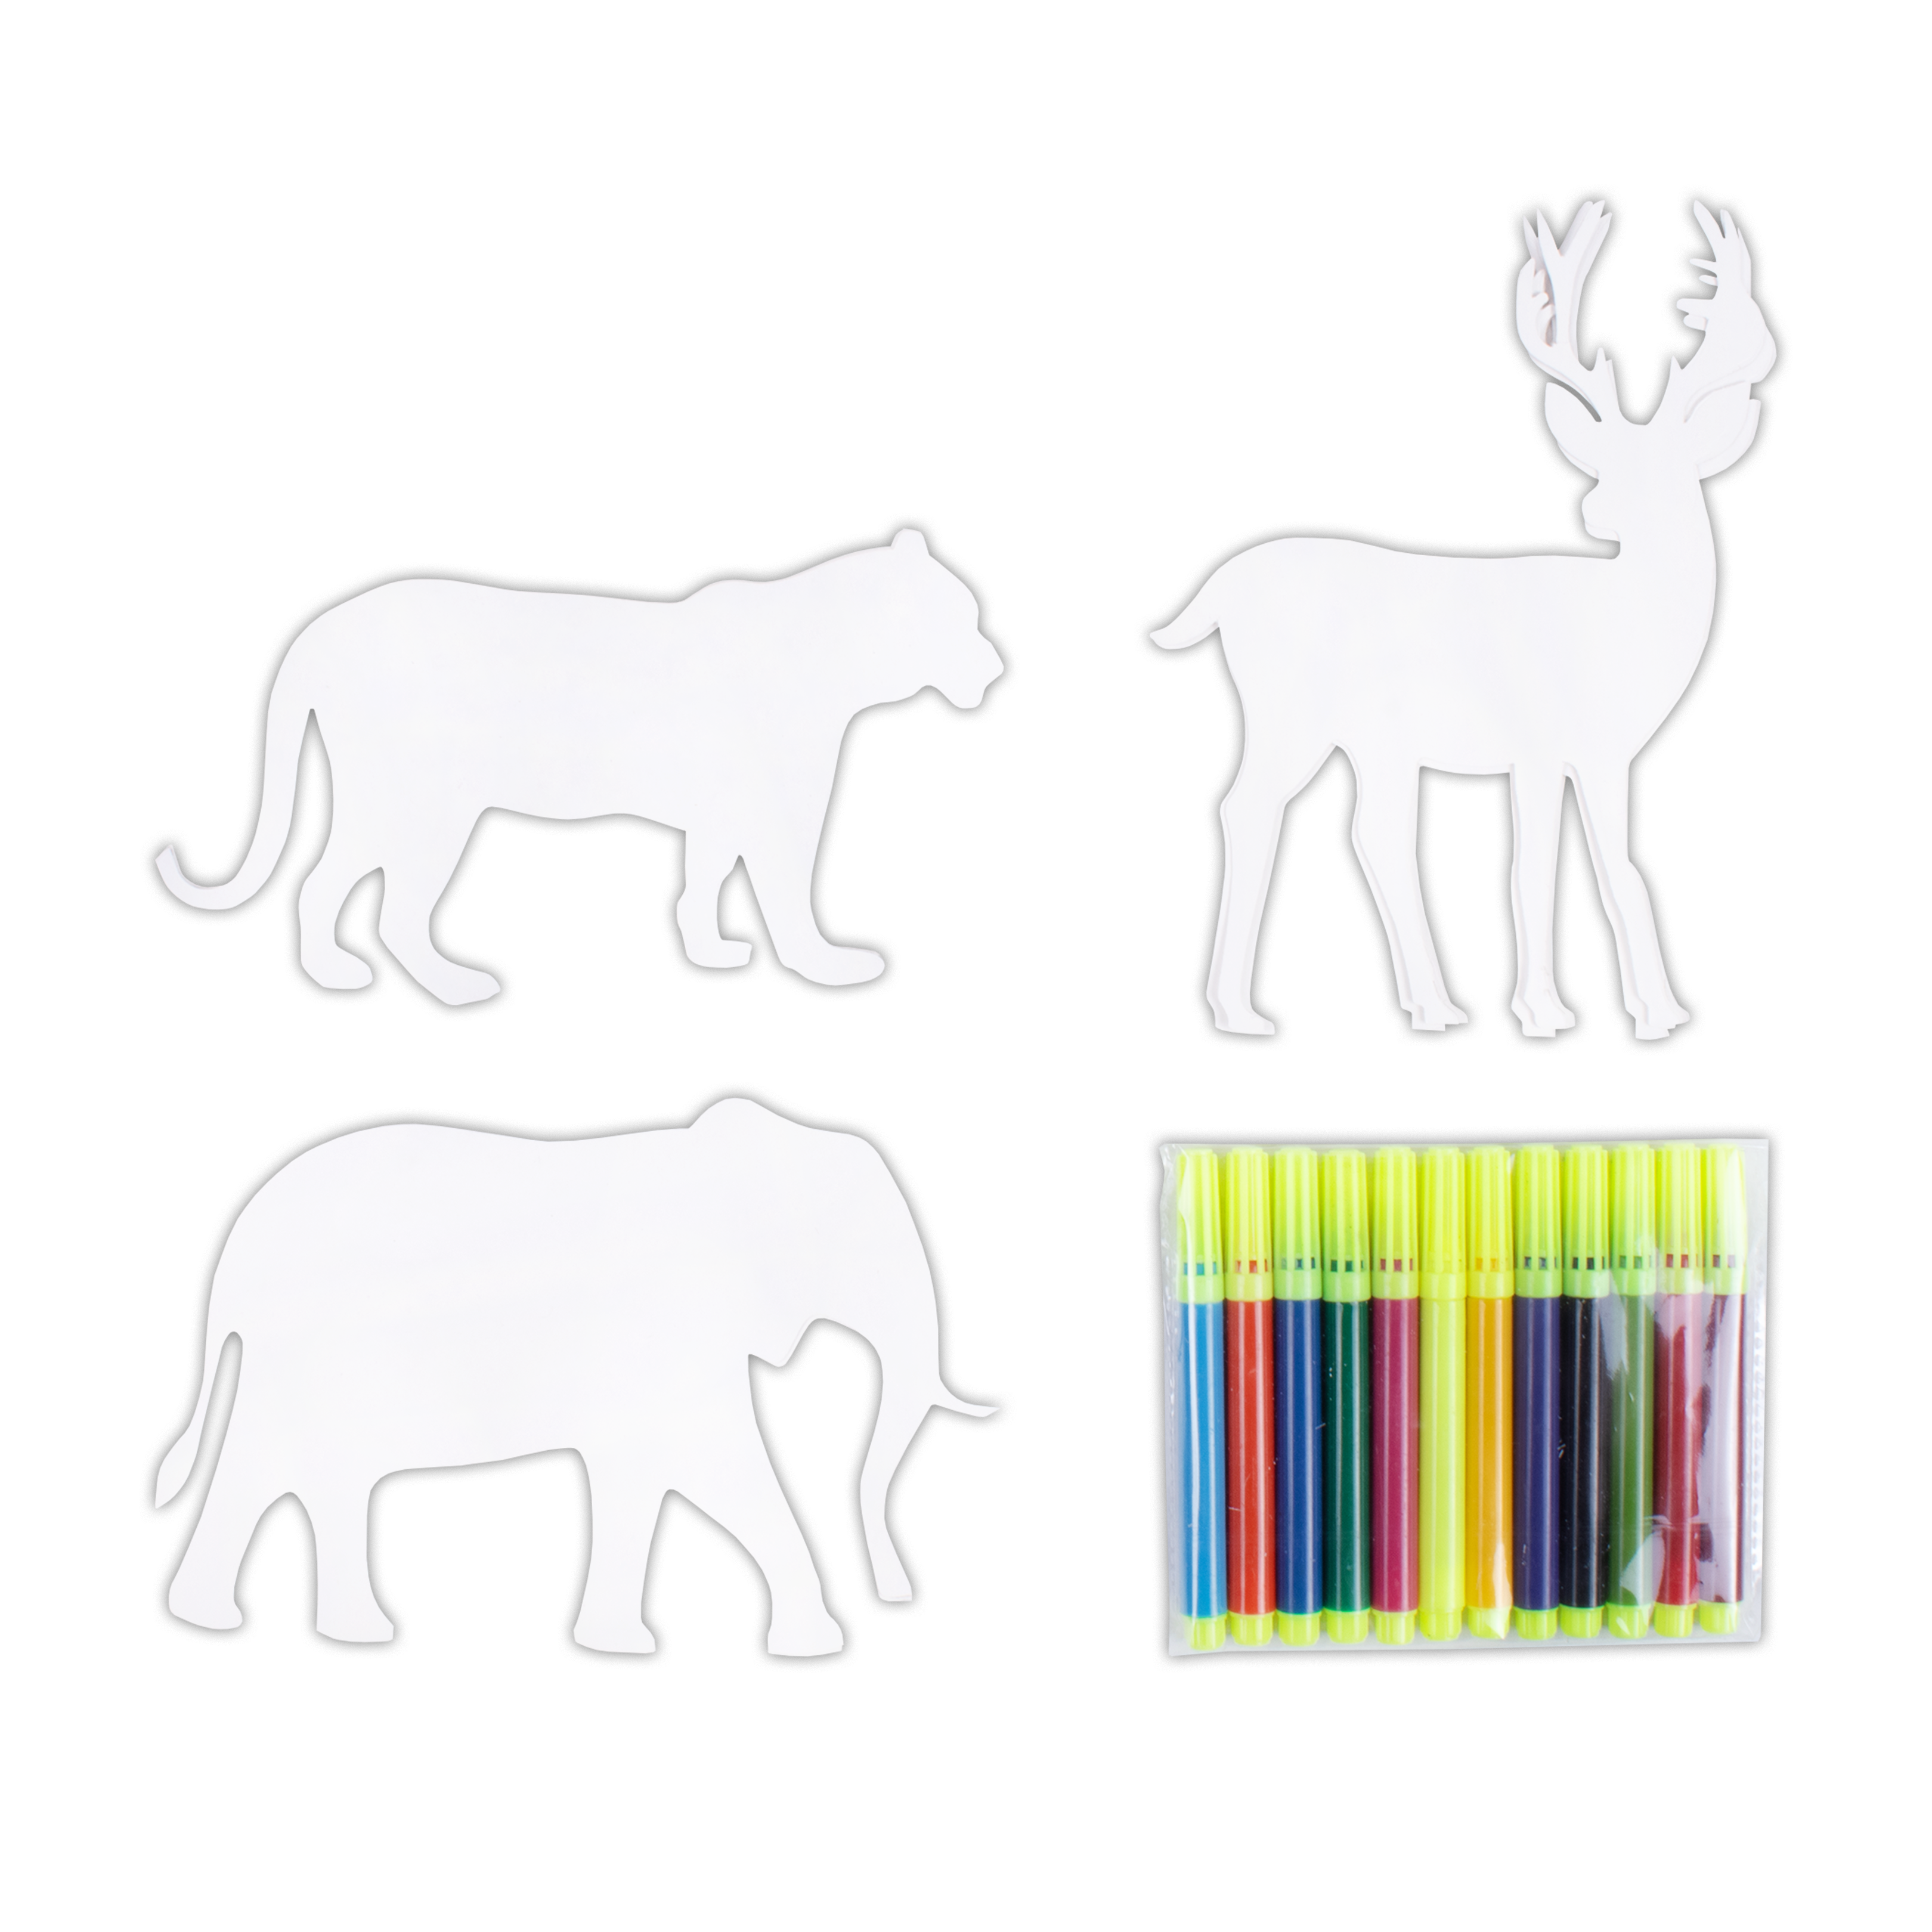 Colour Me Wild Animals Pre- Cut Shapes with 12 Colour Markers 10Pc Box